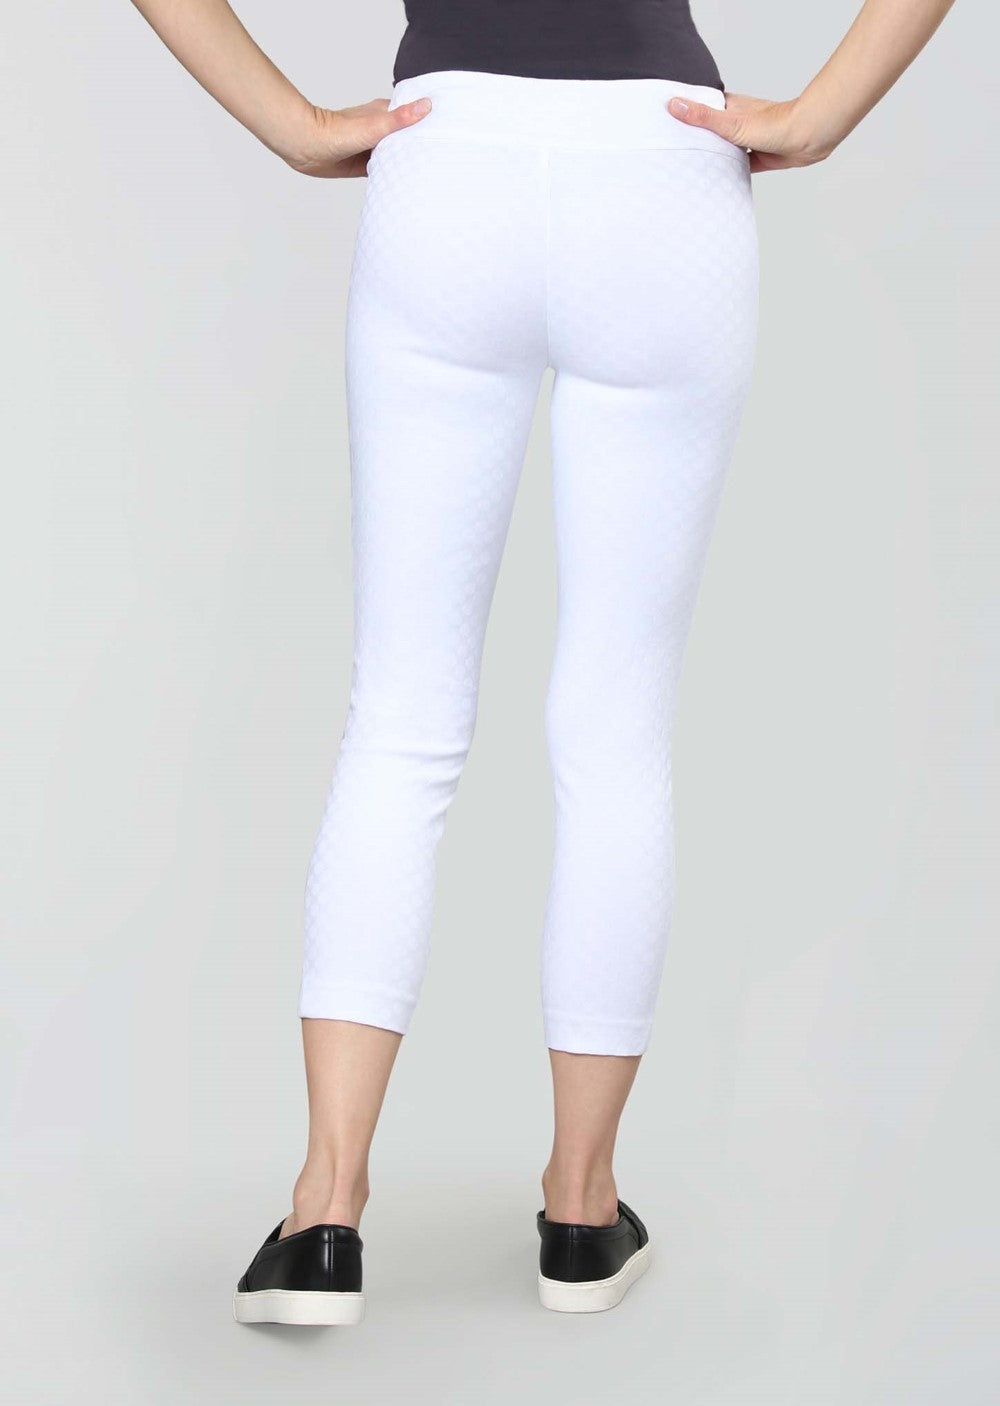 Pantalon Lisette L 78301-02 Blanc